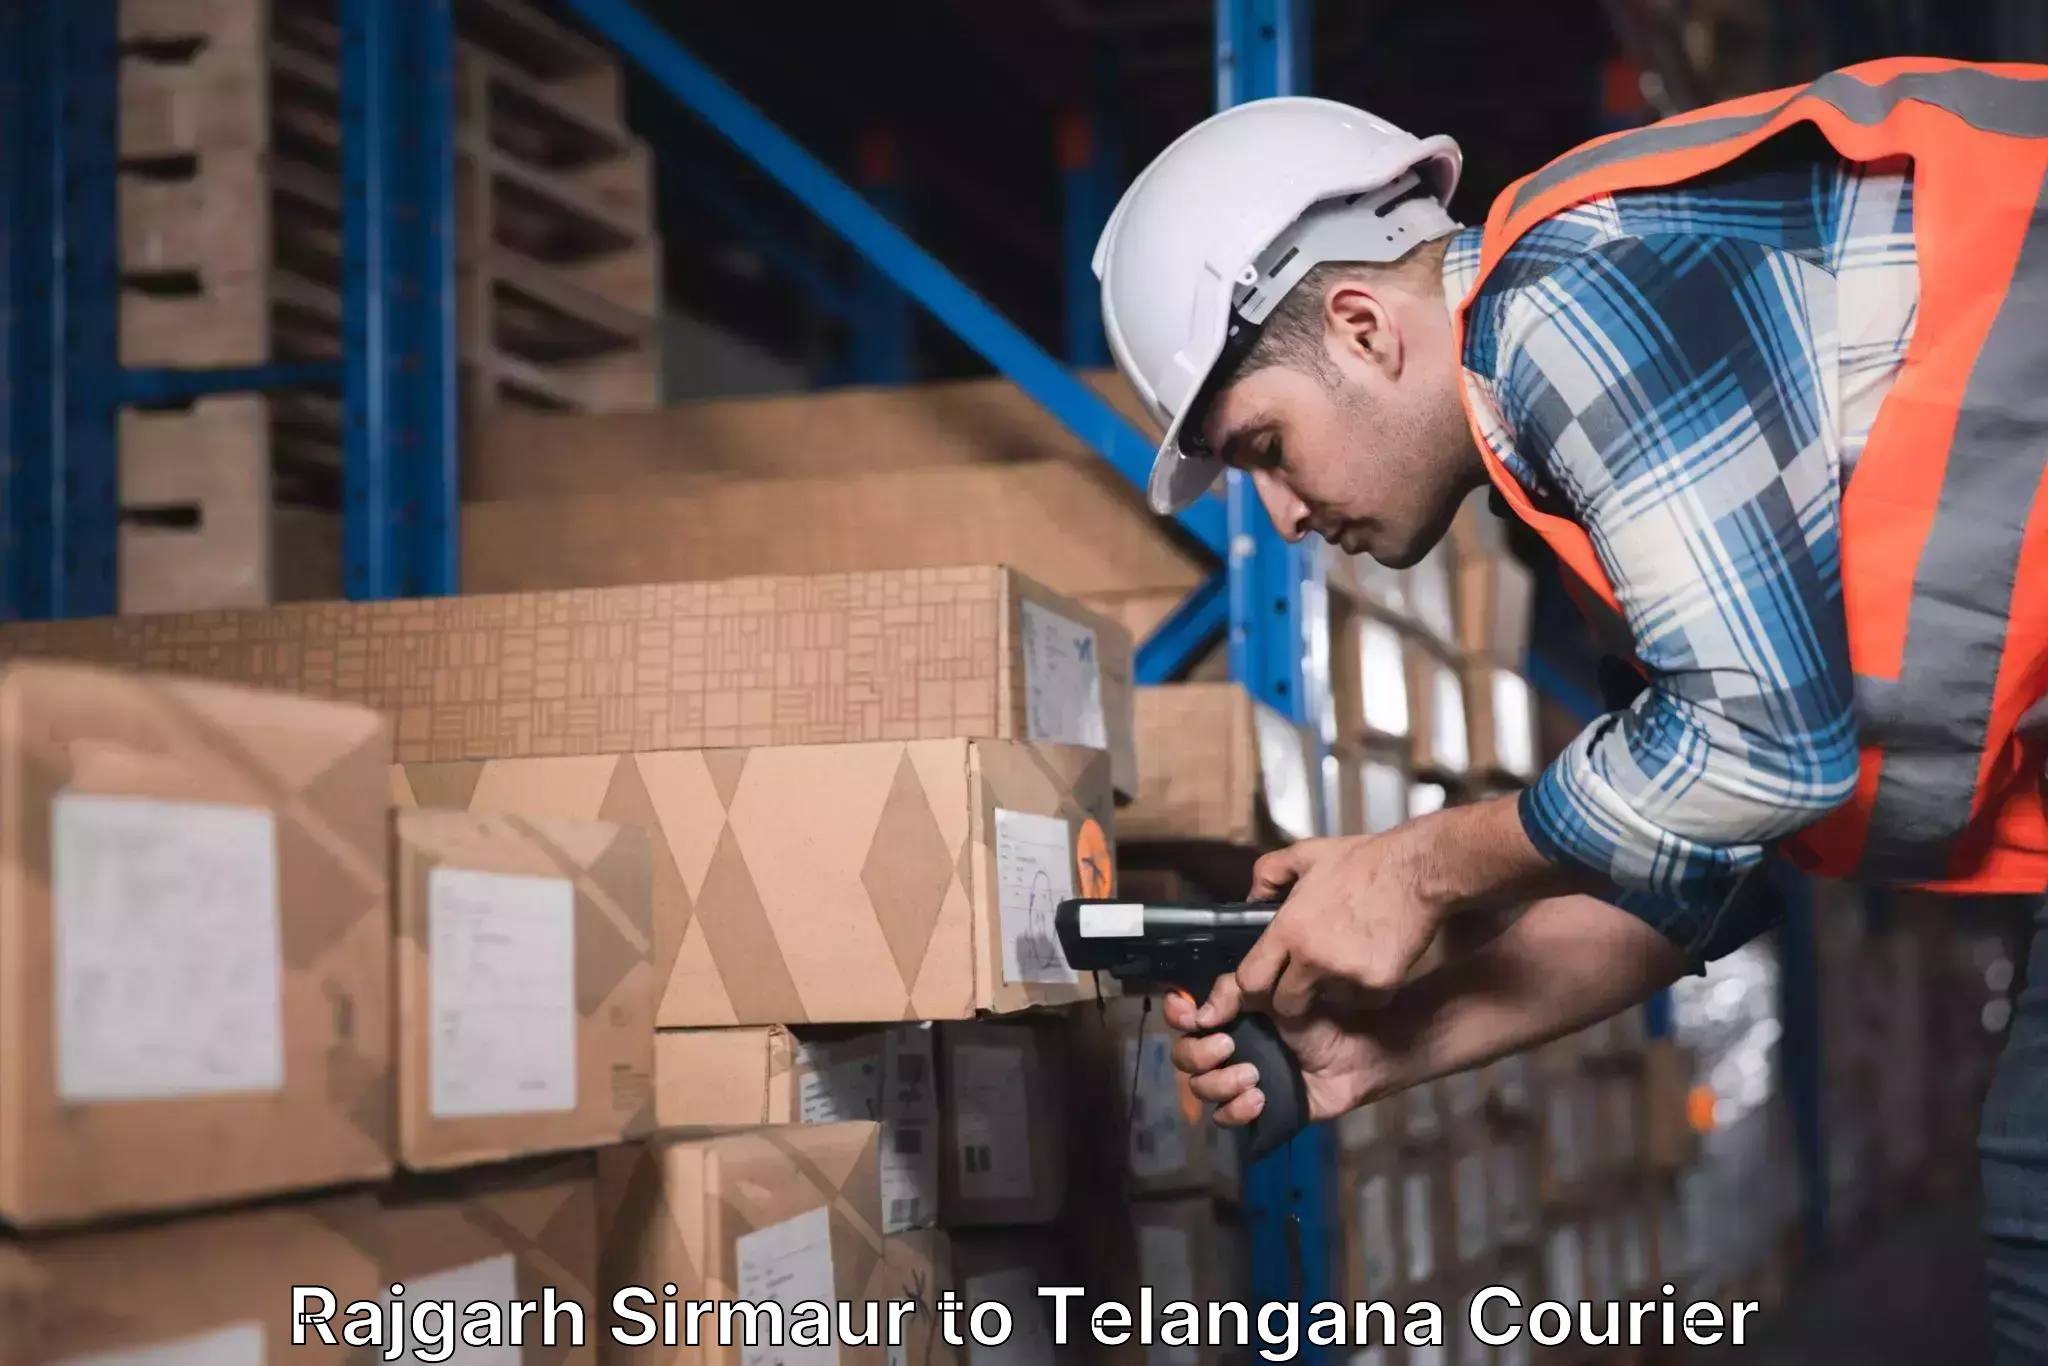 Courier service innovation Rajgarh Sirmaur to Sirikonda